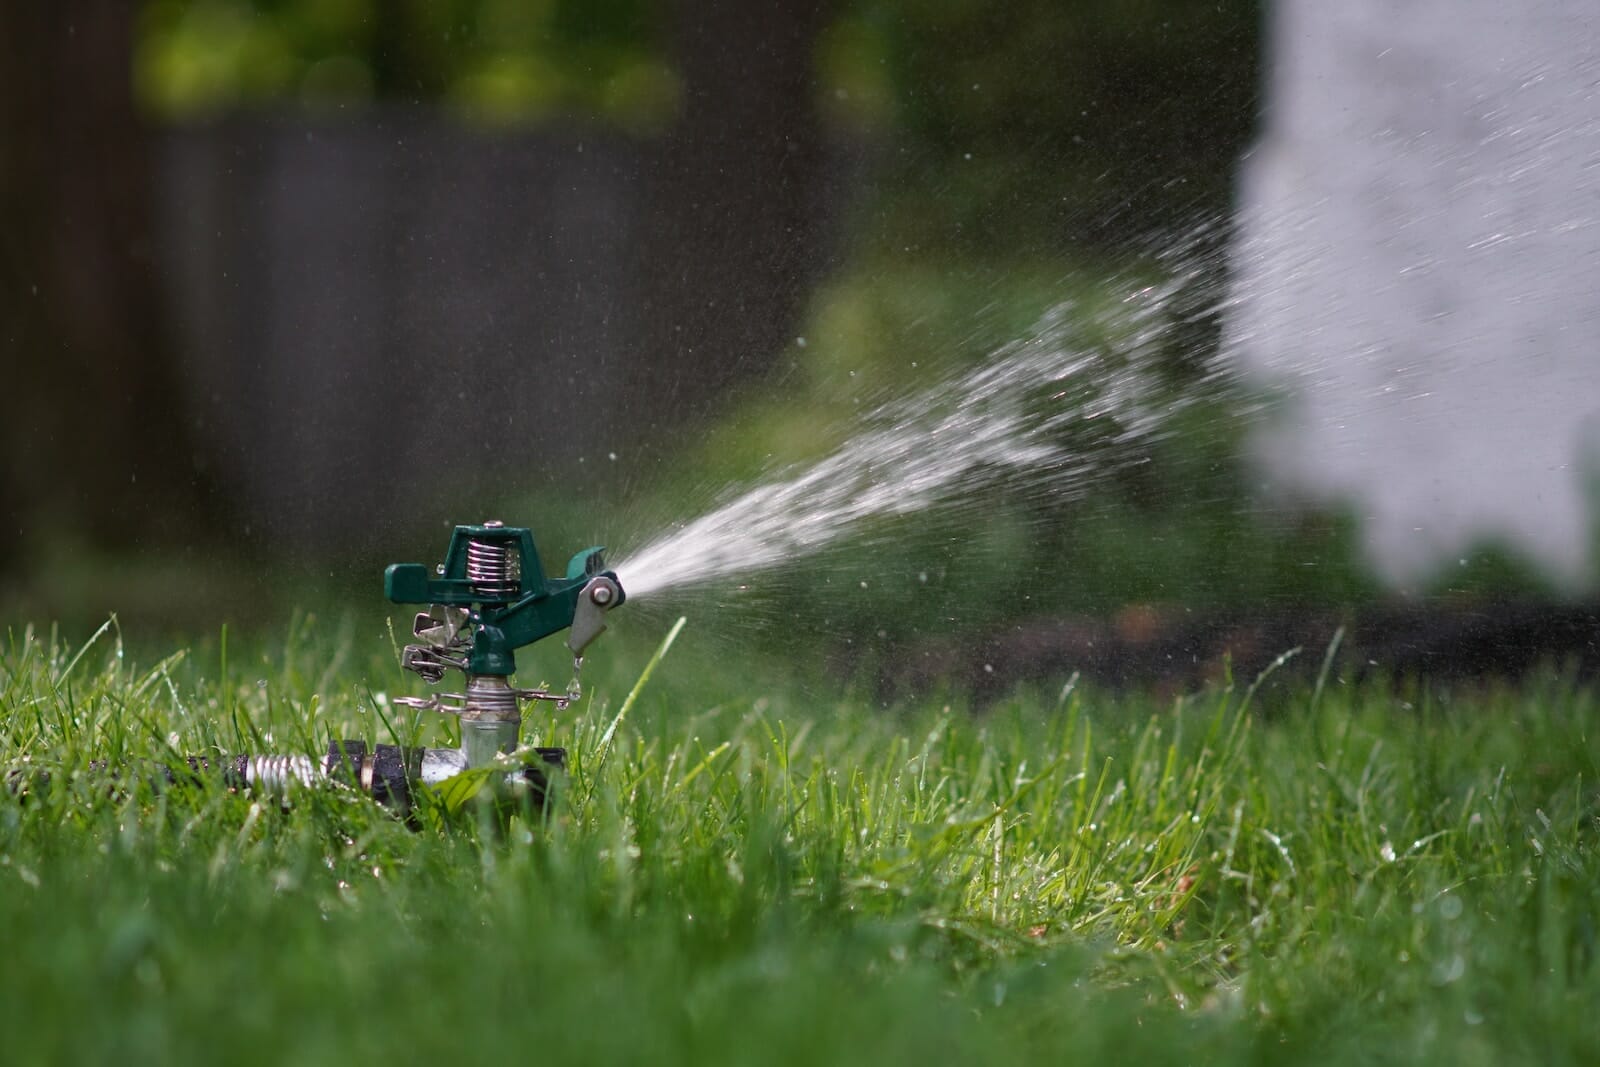 Add a Zone to Sprinkler System